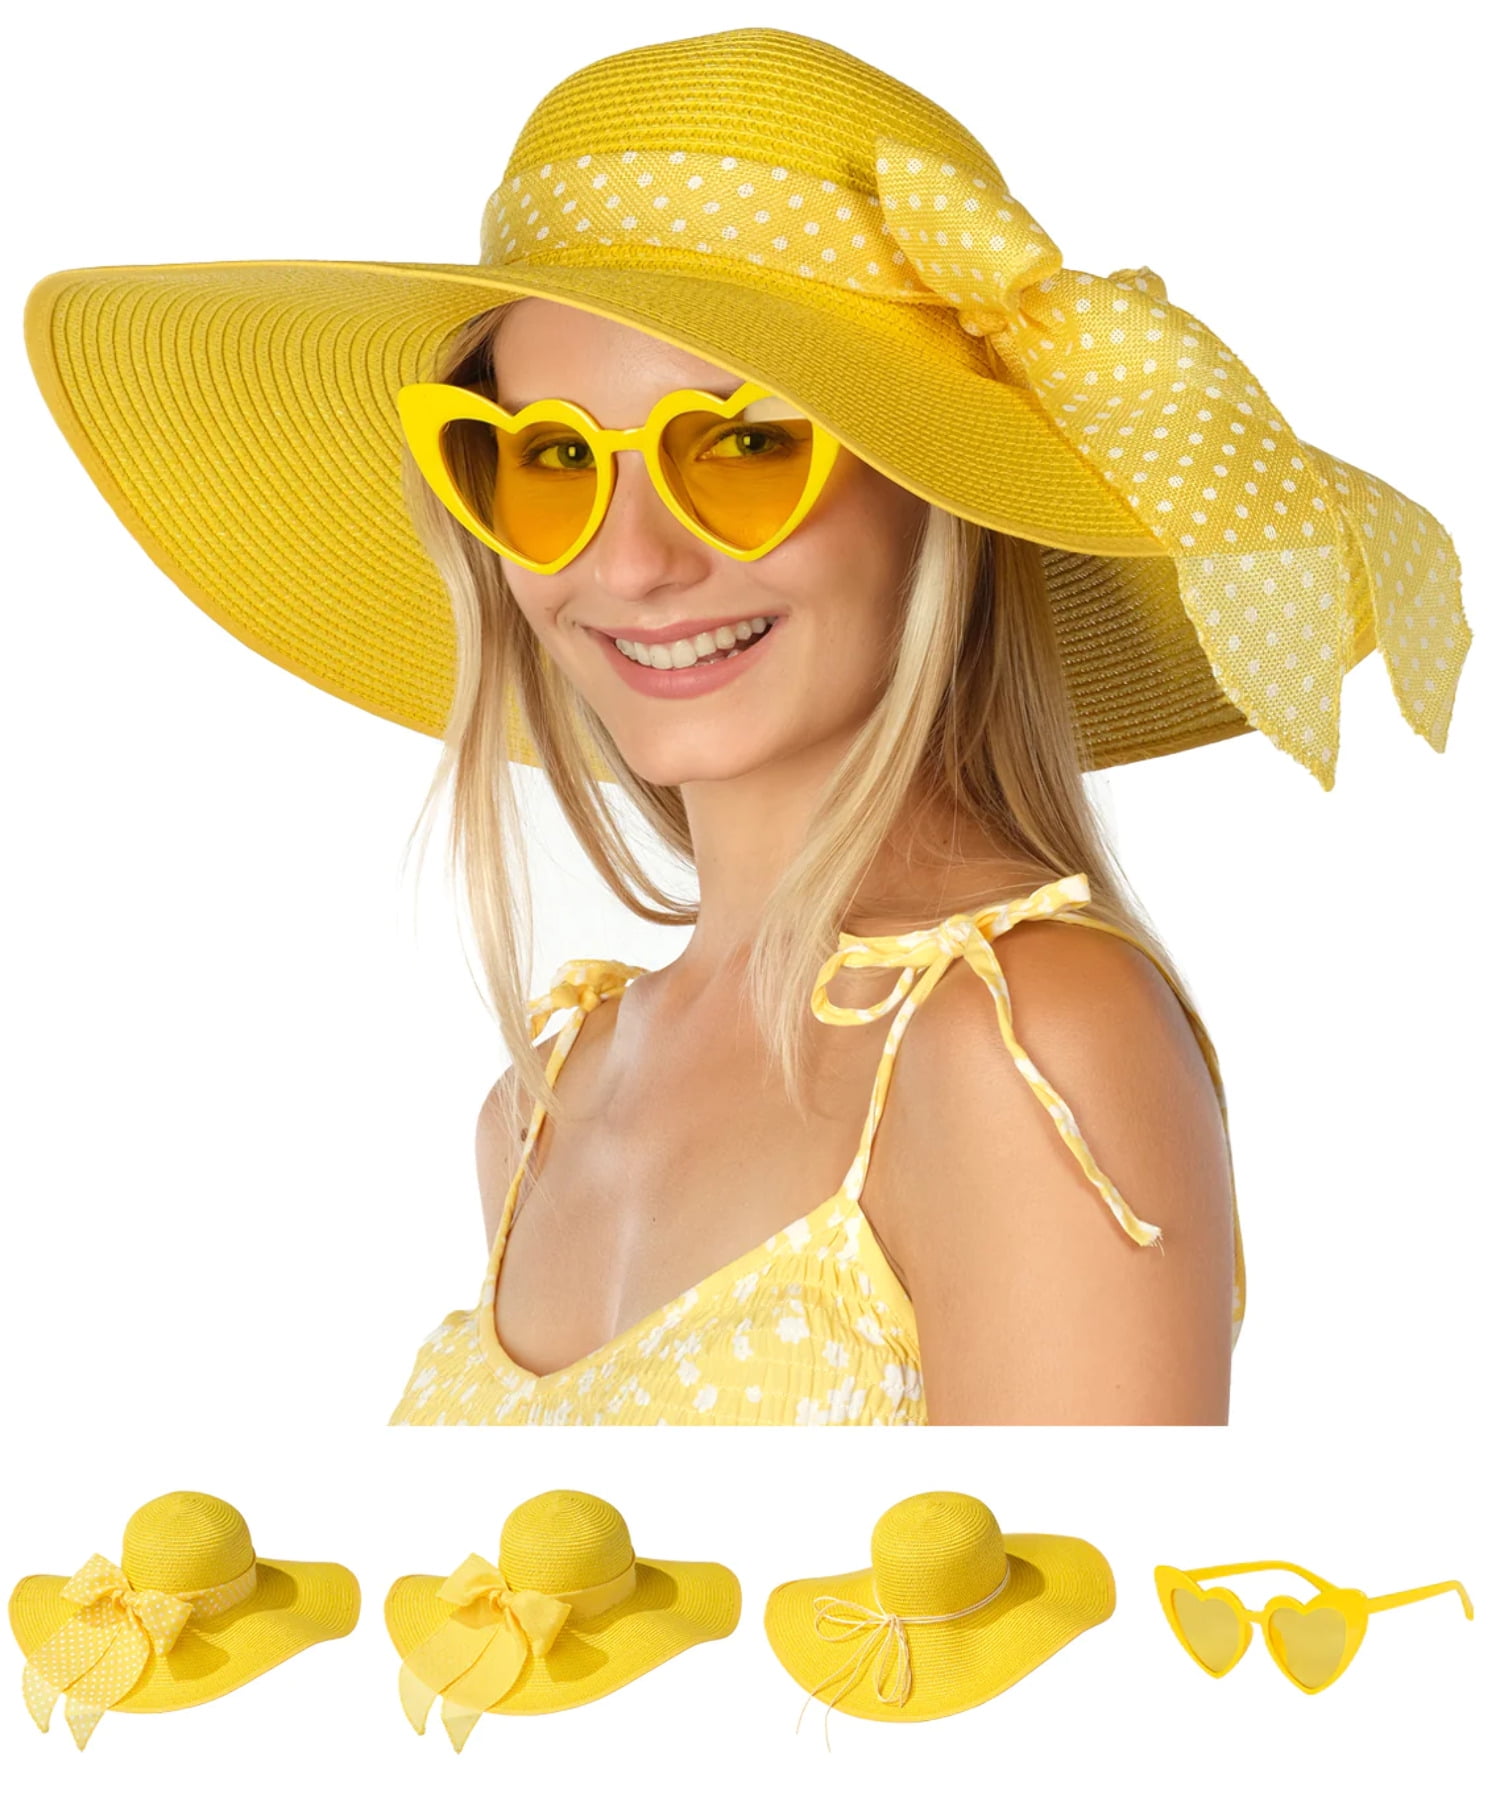 FUNCREDIBLE Wide Brim Sun Hats for Women - Floppy Straw Hat